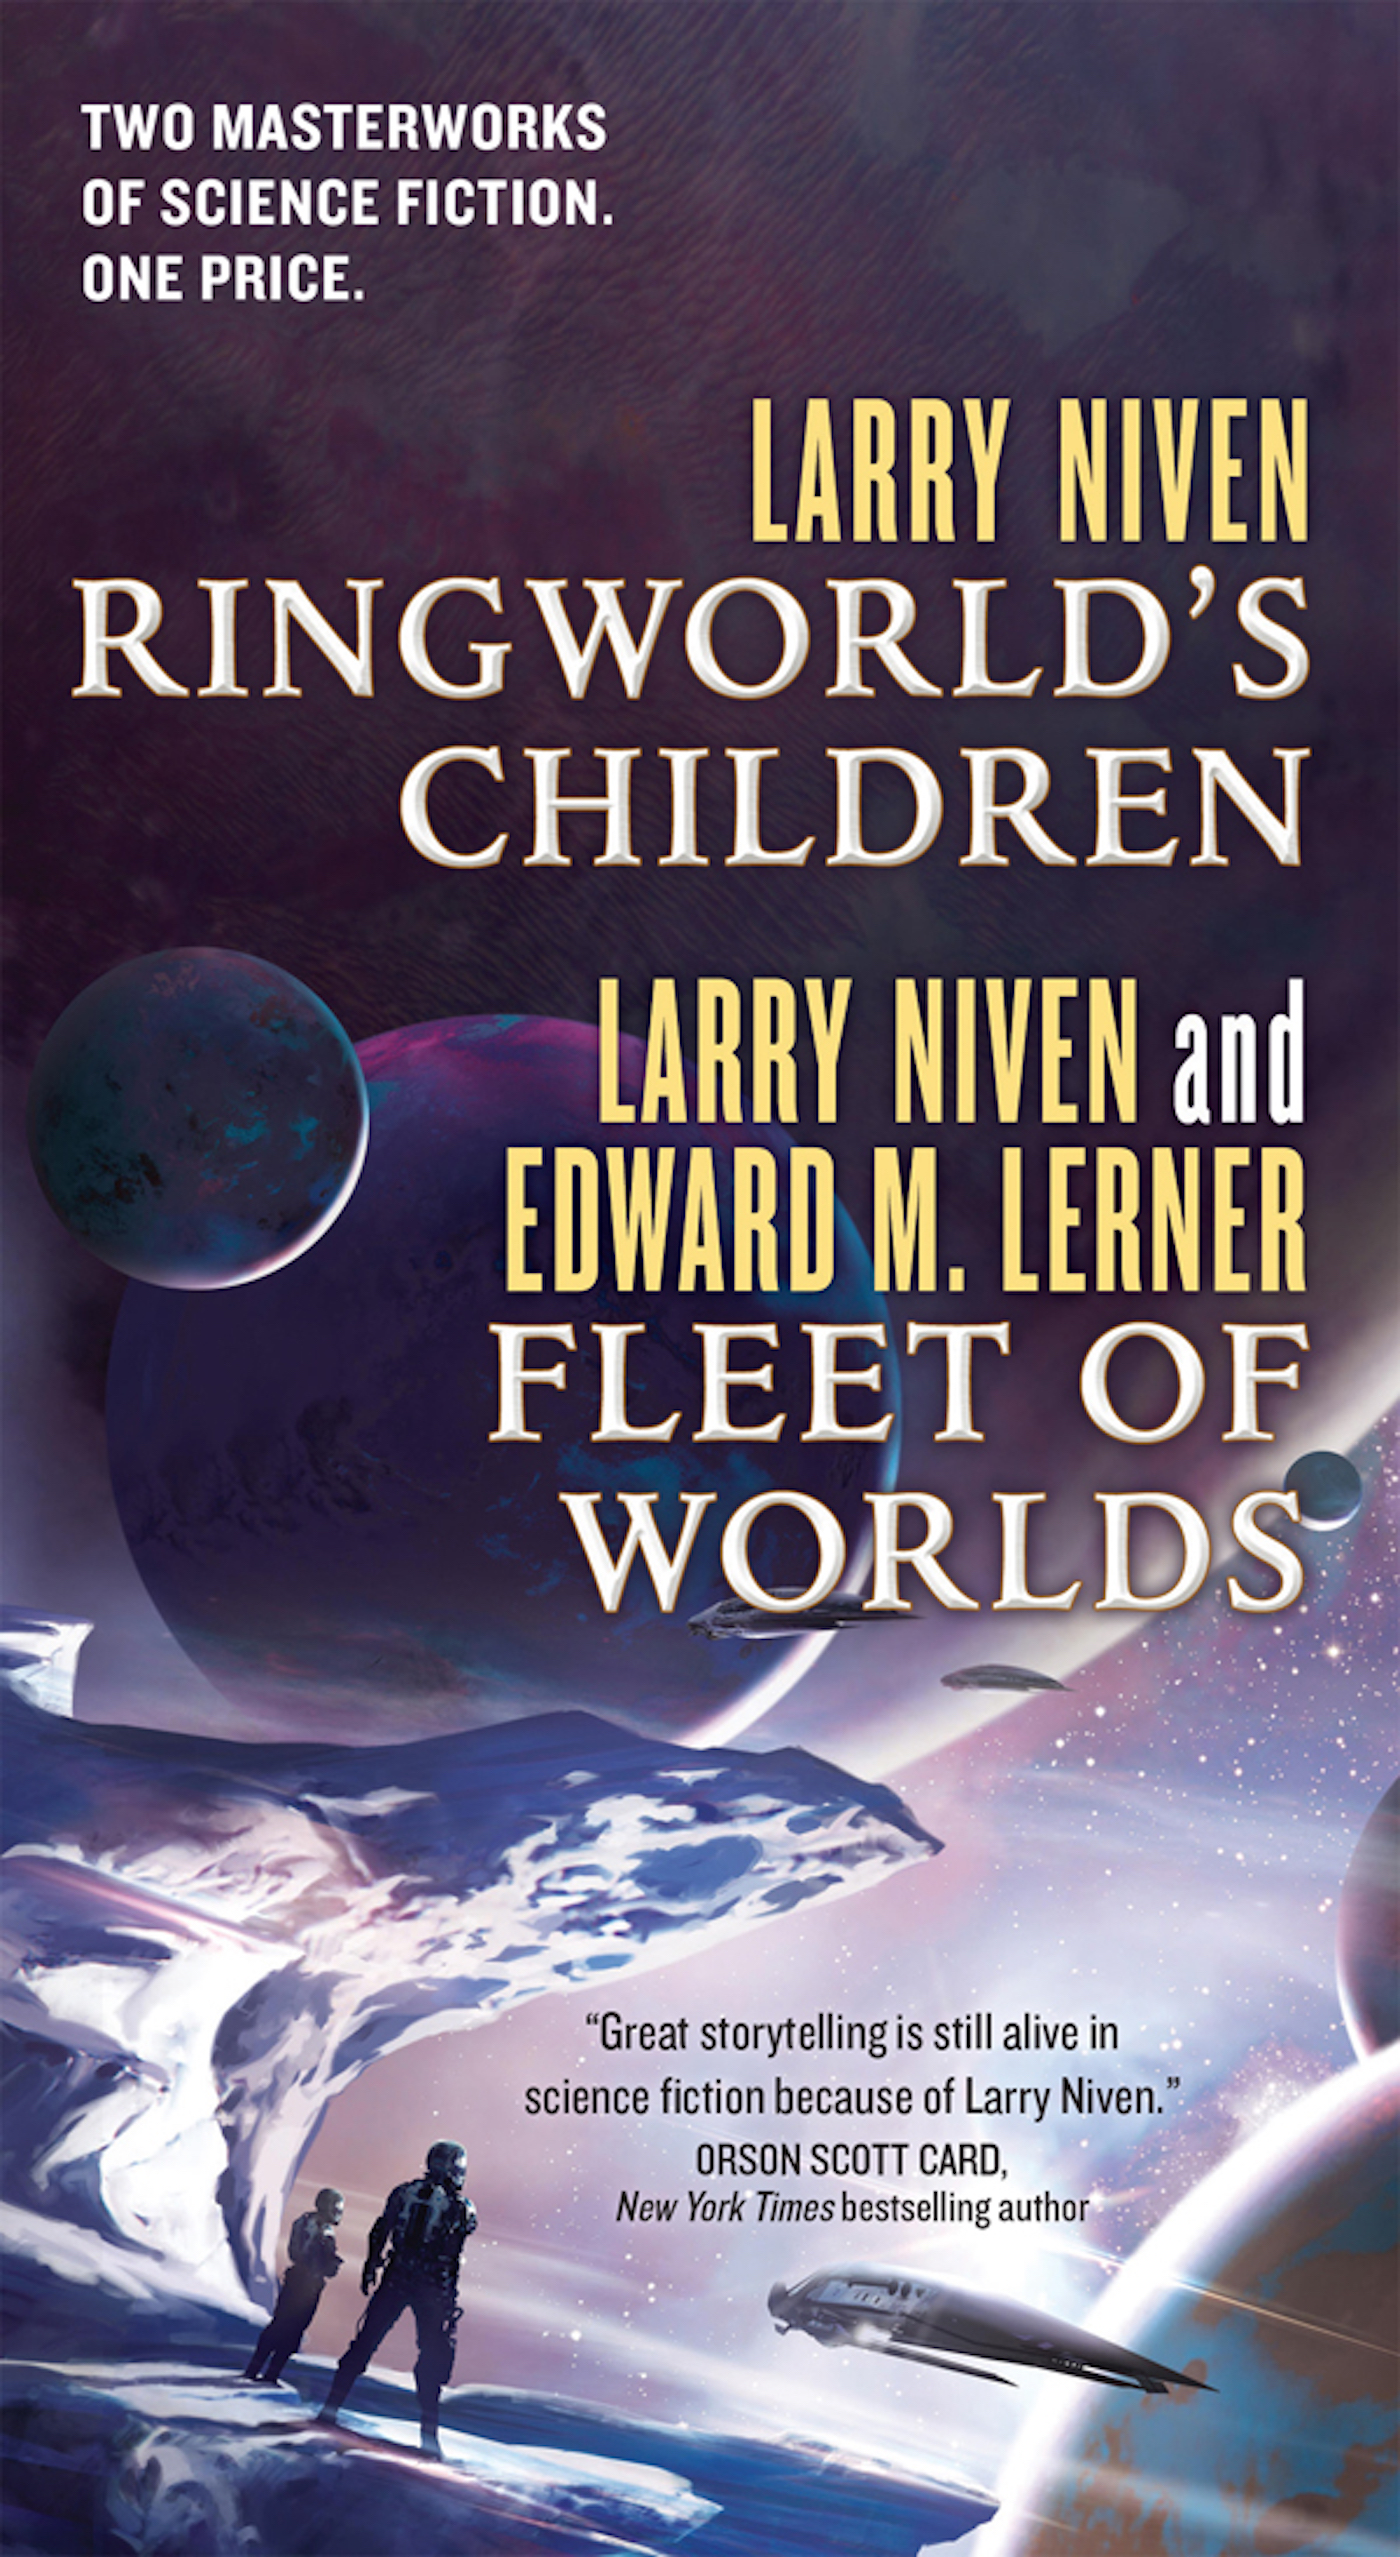 Ringworld's Children and Fleet of Worlds by Larry Niven, Edward M. Lerner